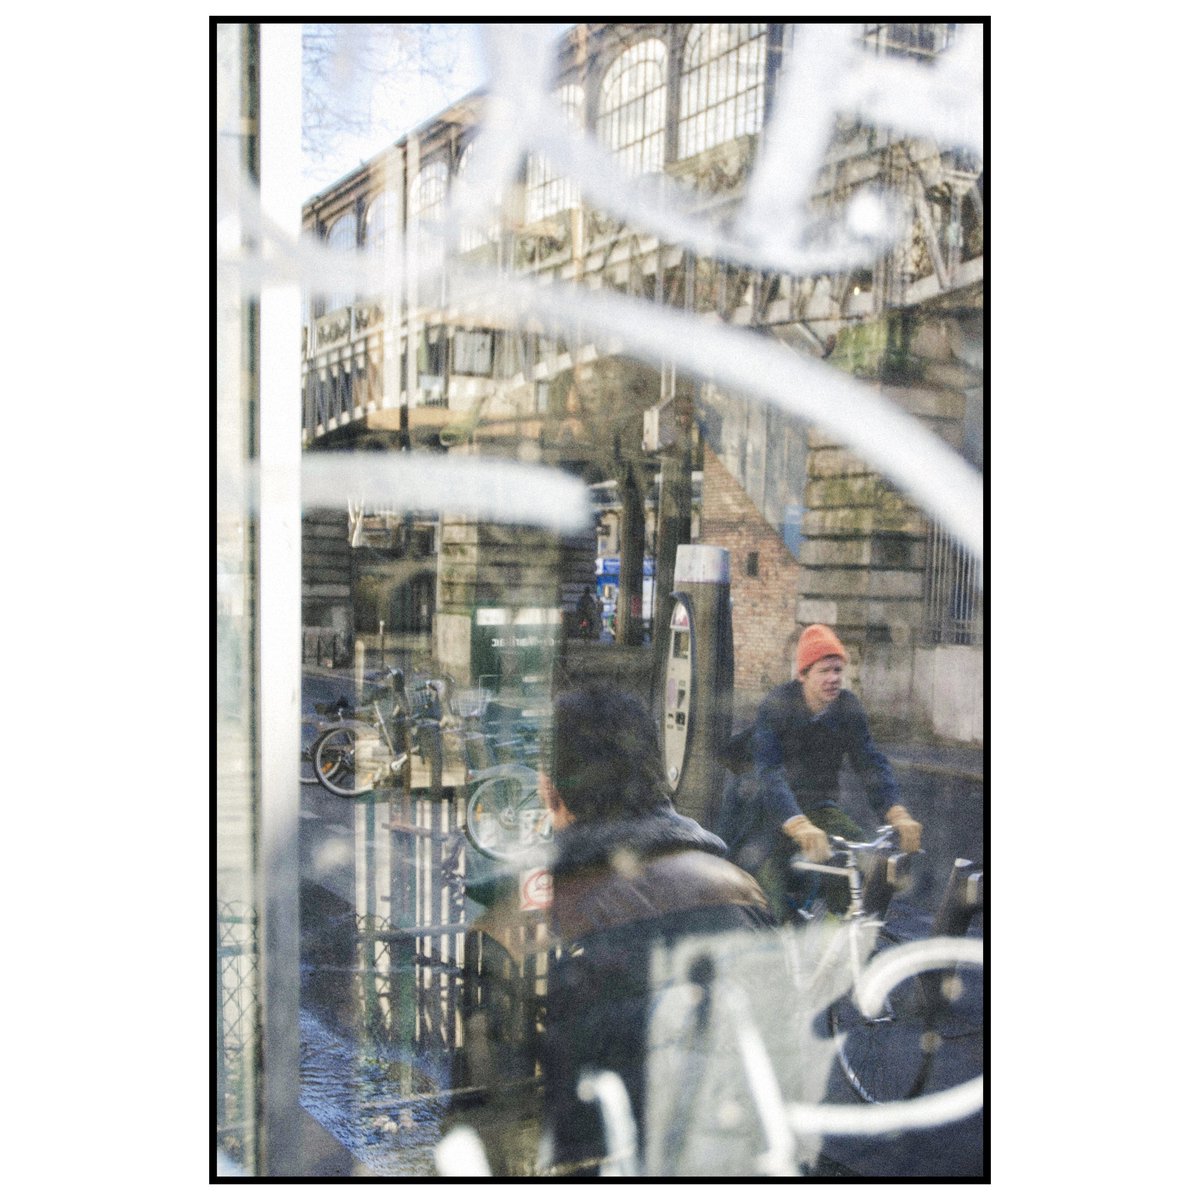 ~ Raw Street ~
| #YouSawScenes #UrbanPhotography #Urban #Street #Raw #Snap #StreetPhotography #Photography #GLX #GLXphotography #Sony #France #Paris #Art #ストリートフォトグラフィー #ストリート写真 #写真撮影 |